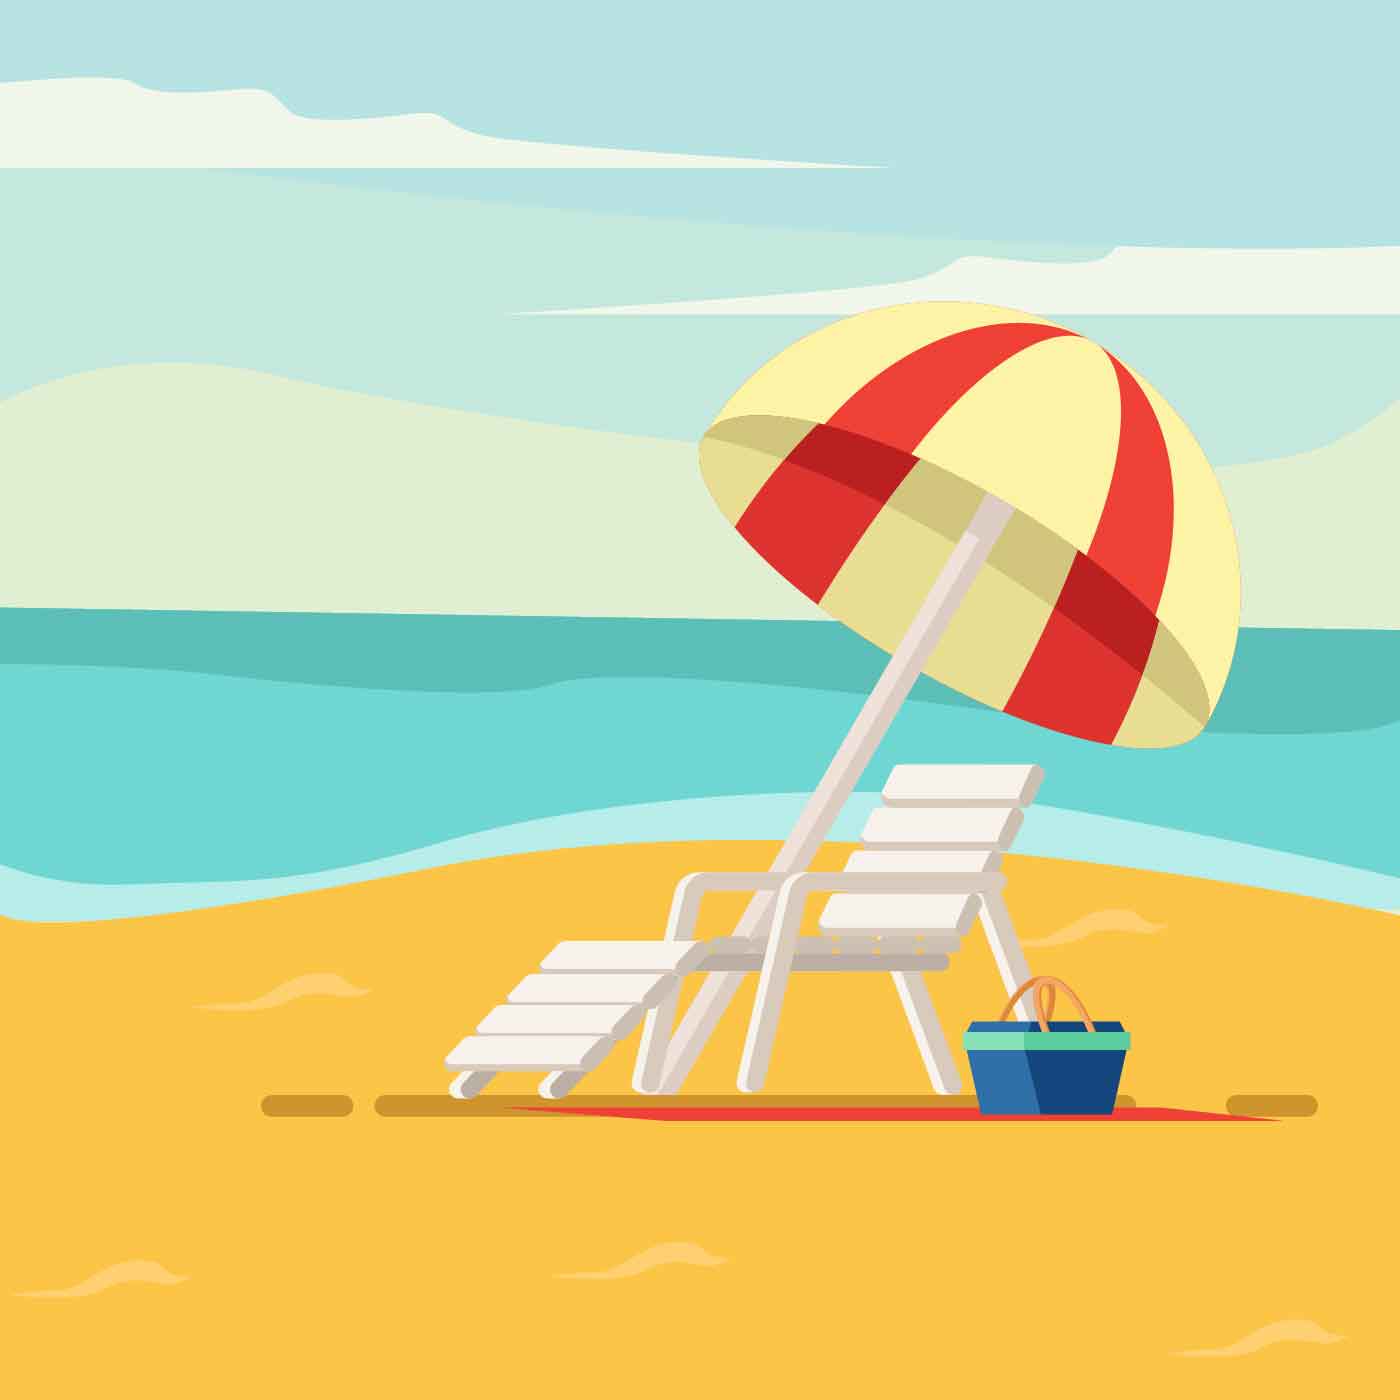 Beach Vacation Illustration - Download Free Vectors ...